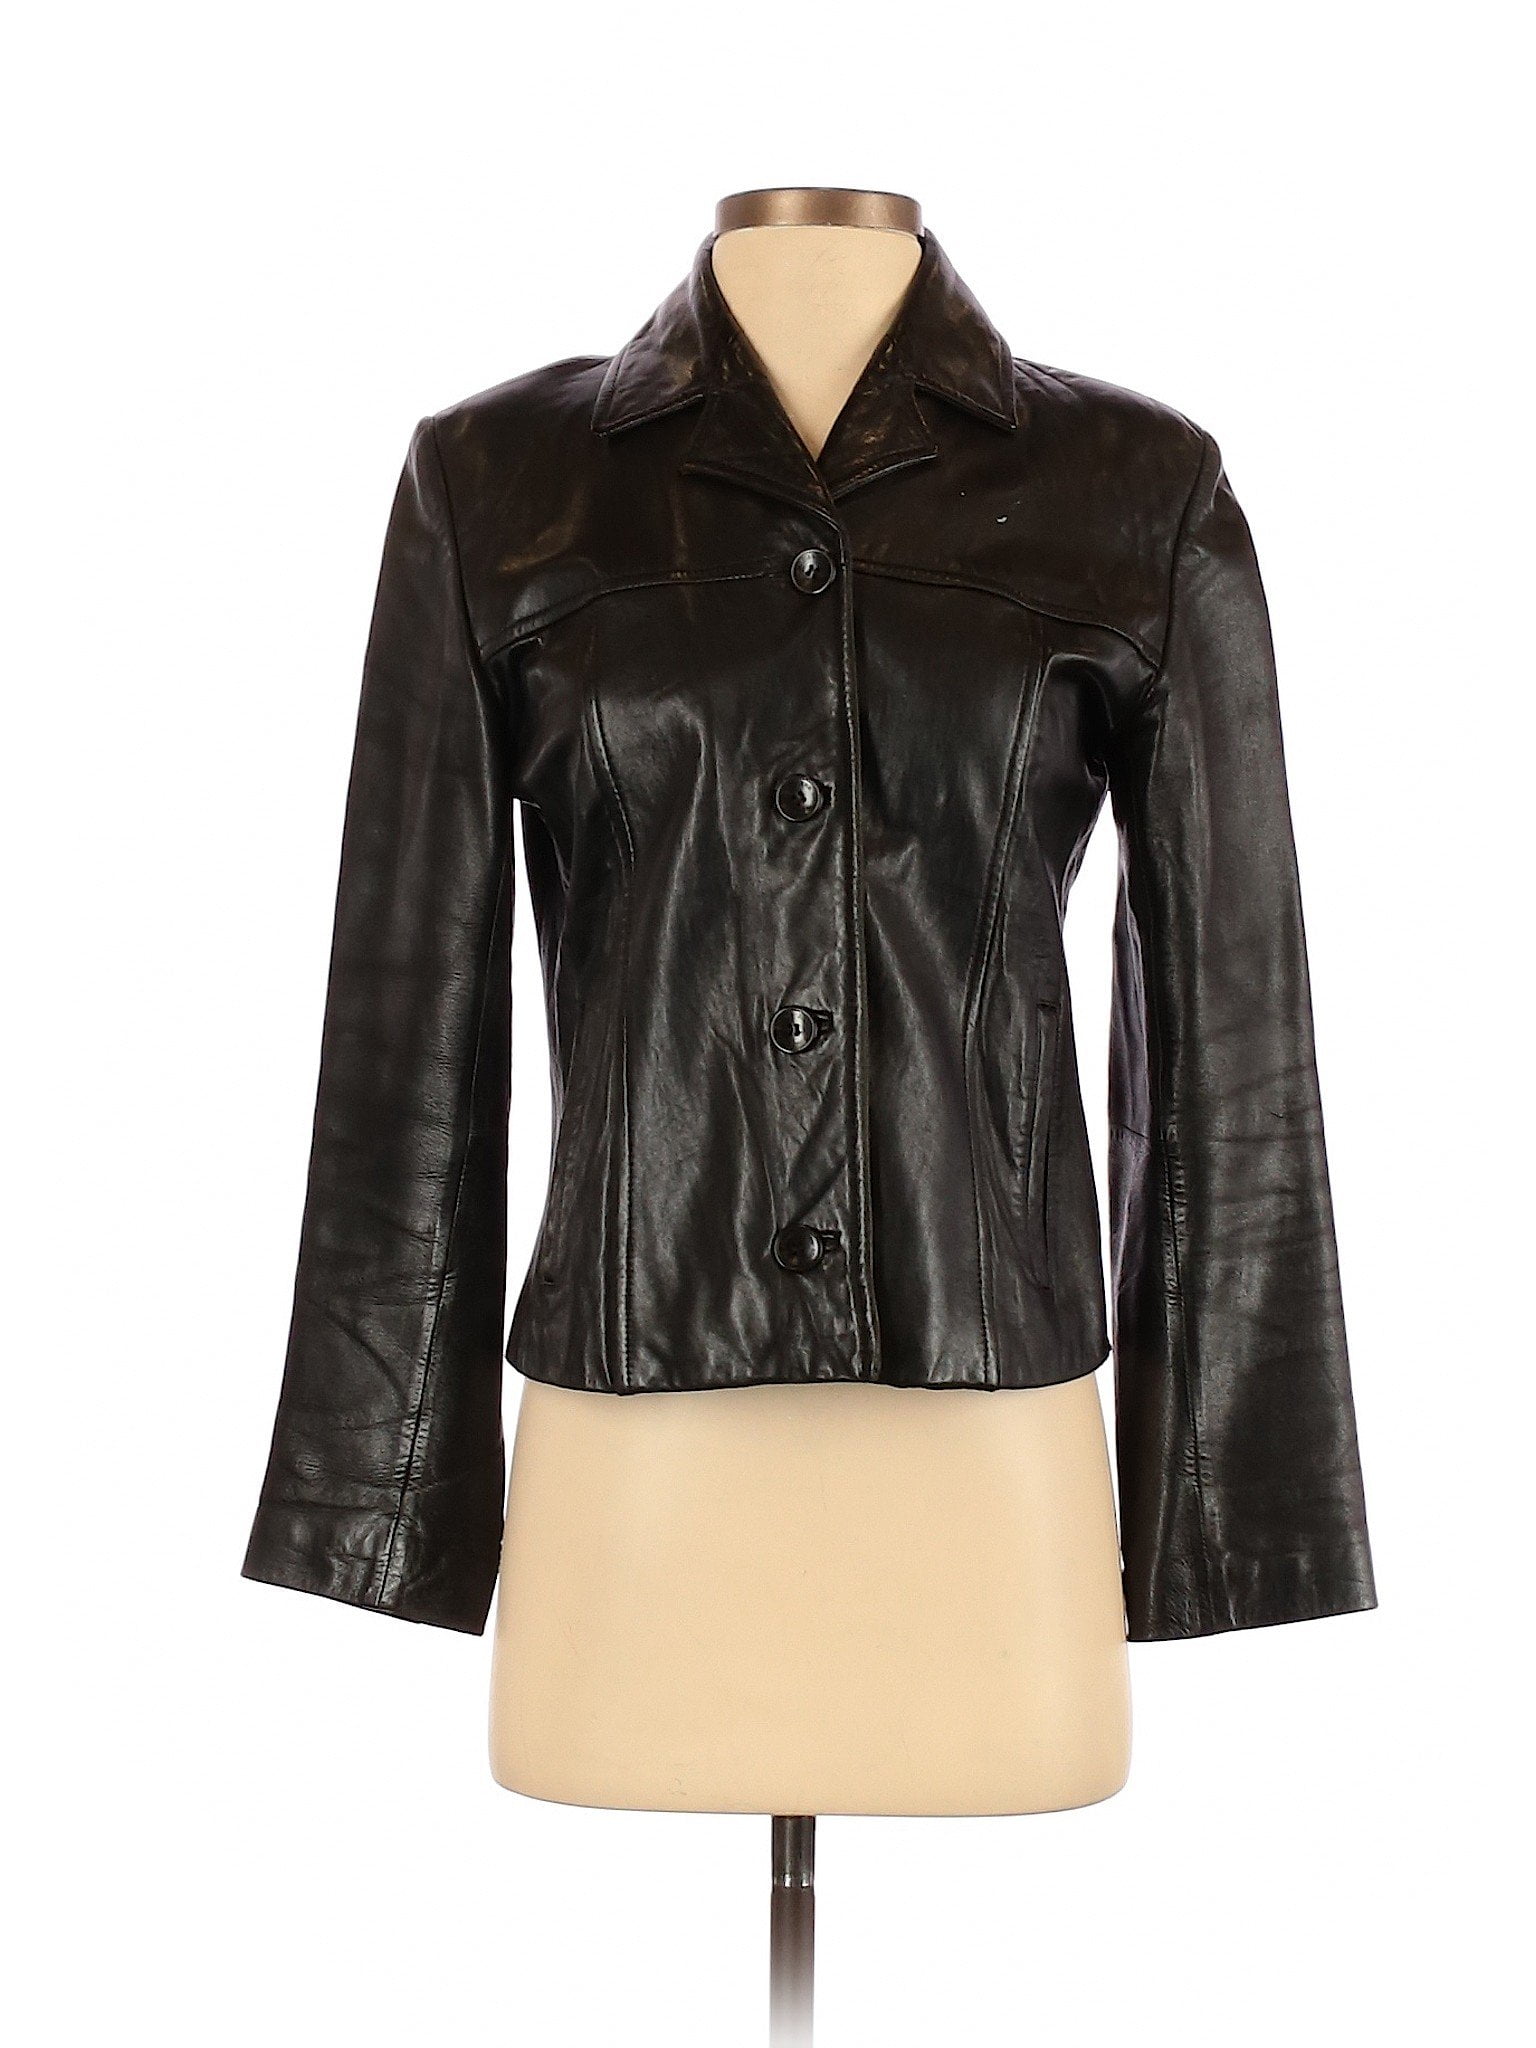 Siena Studio - Pre-Owned Siena Studio Women's Size XS Leather Jacket ...